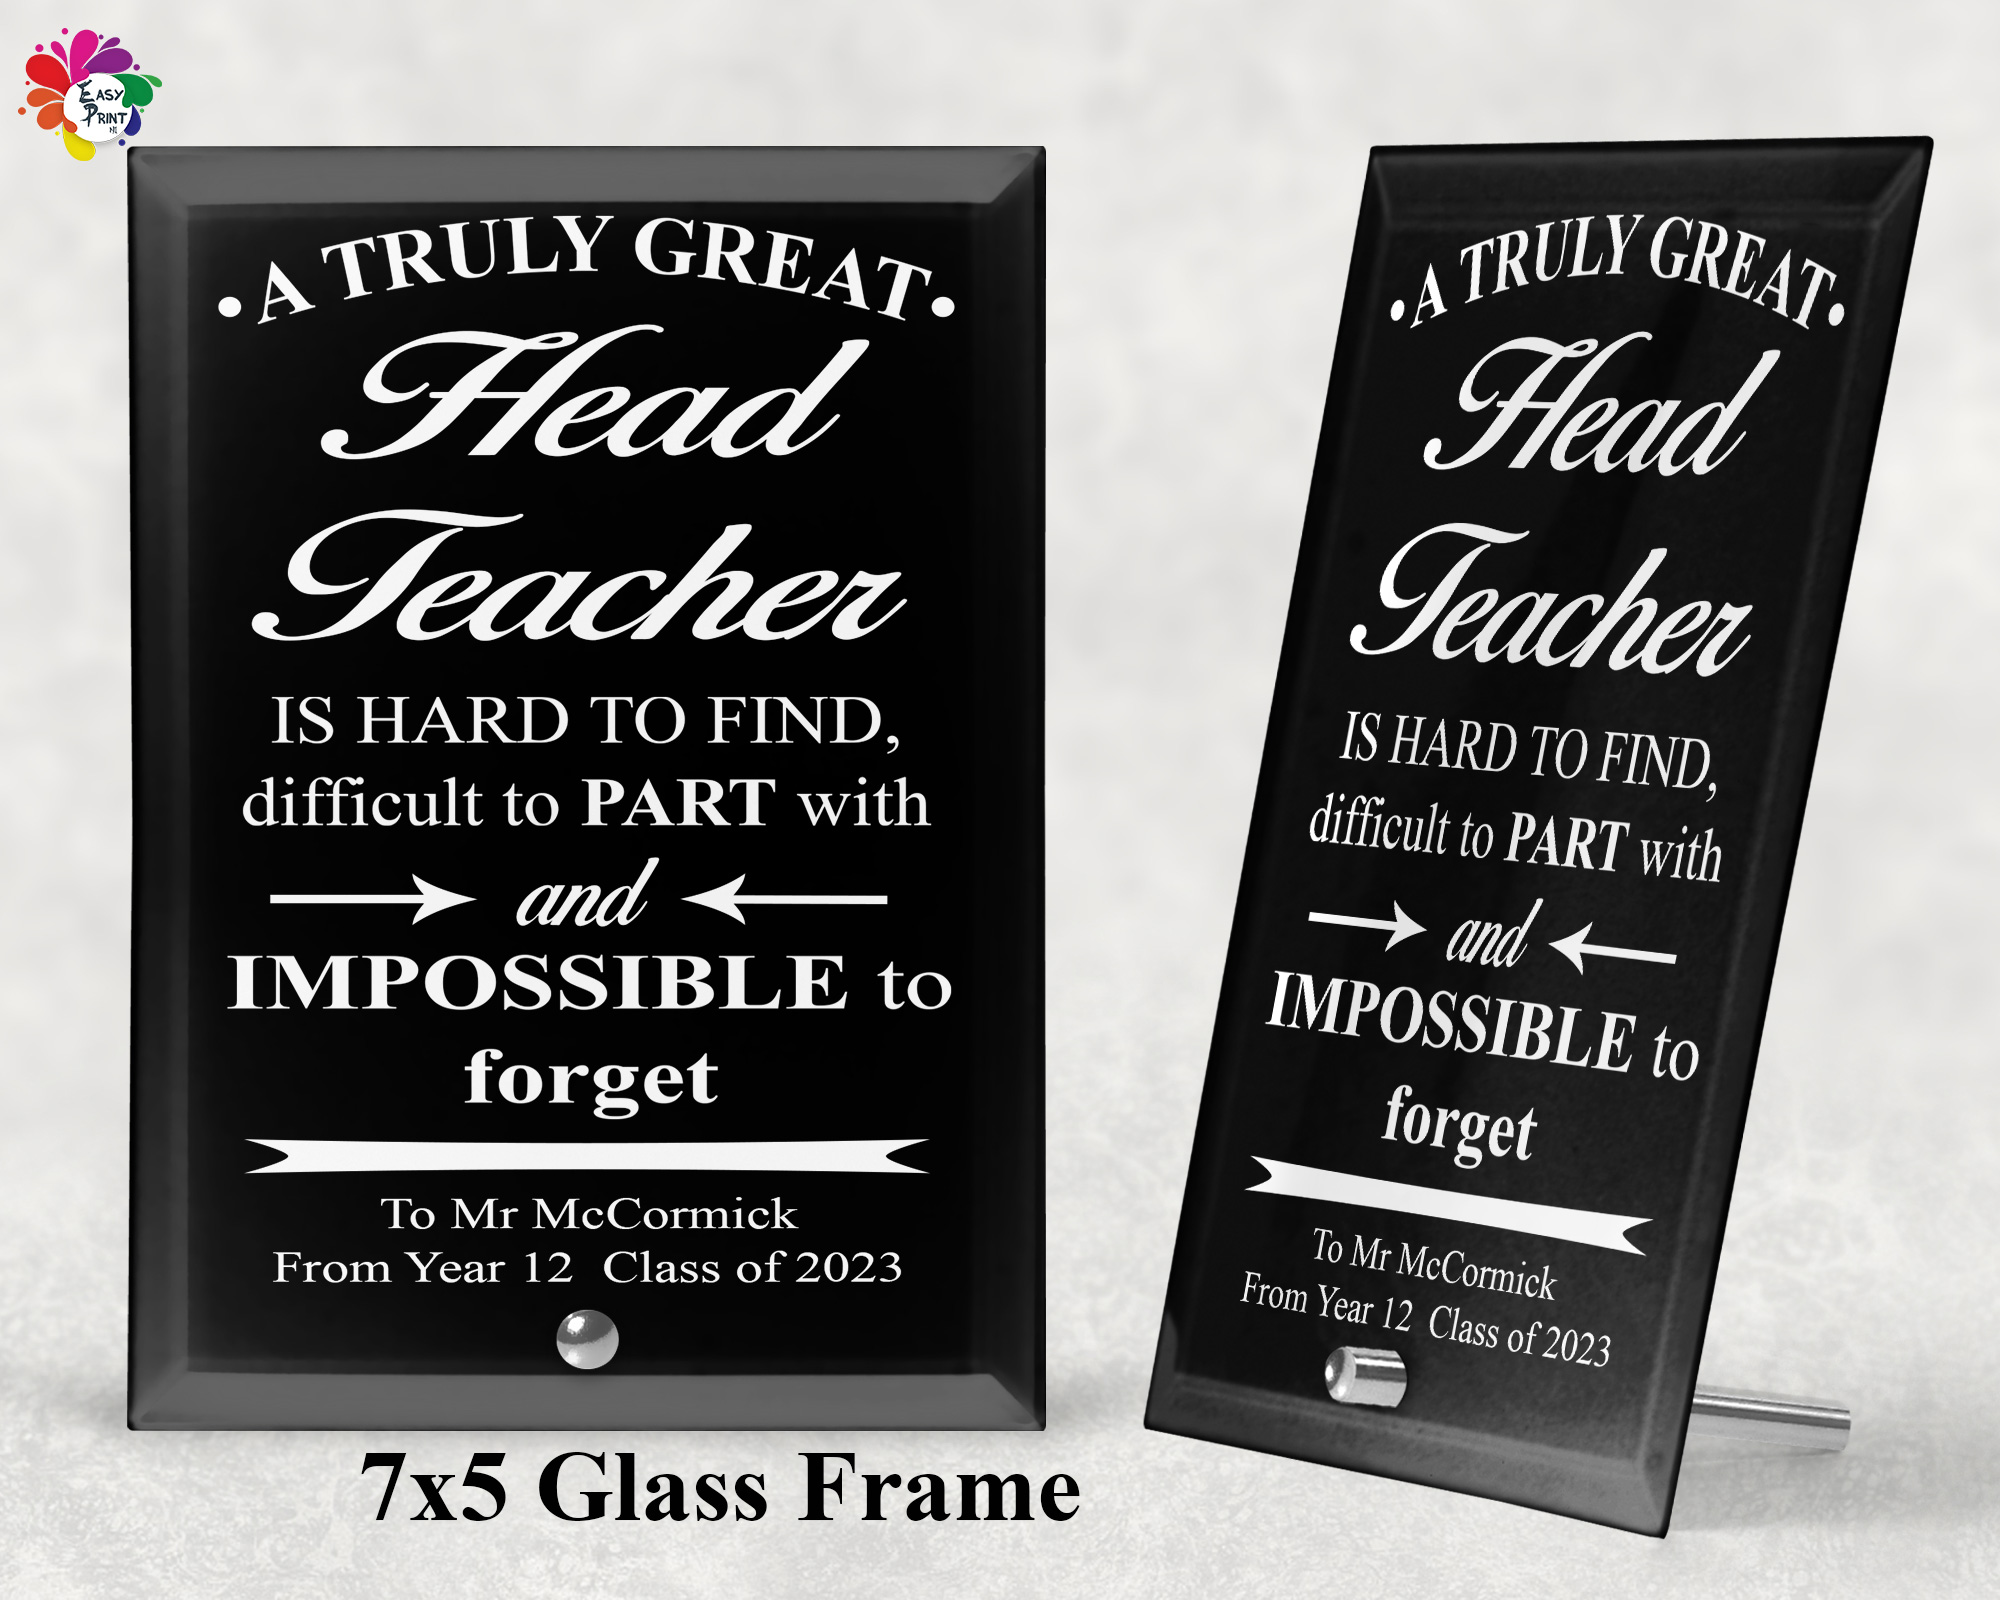 Online personalised glass photo frames -Presto